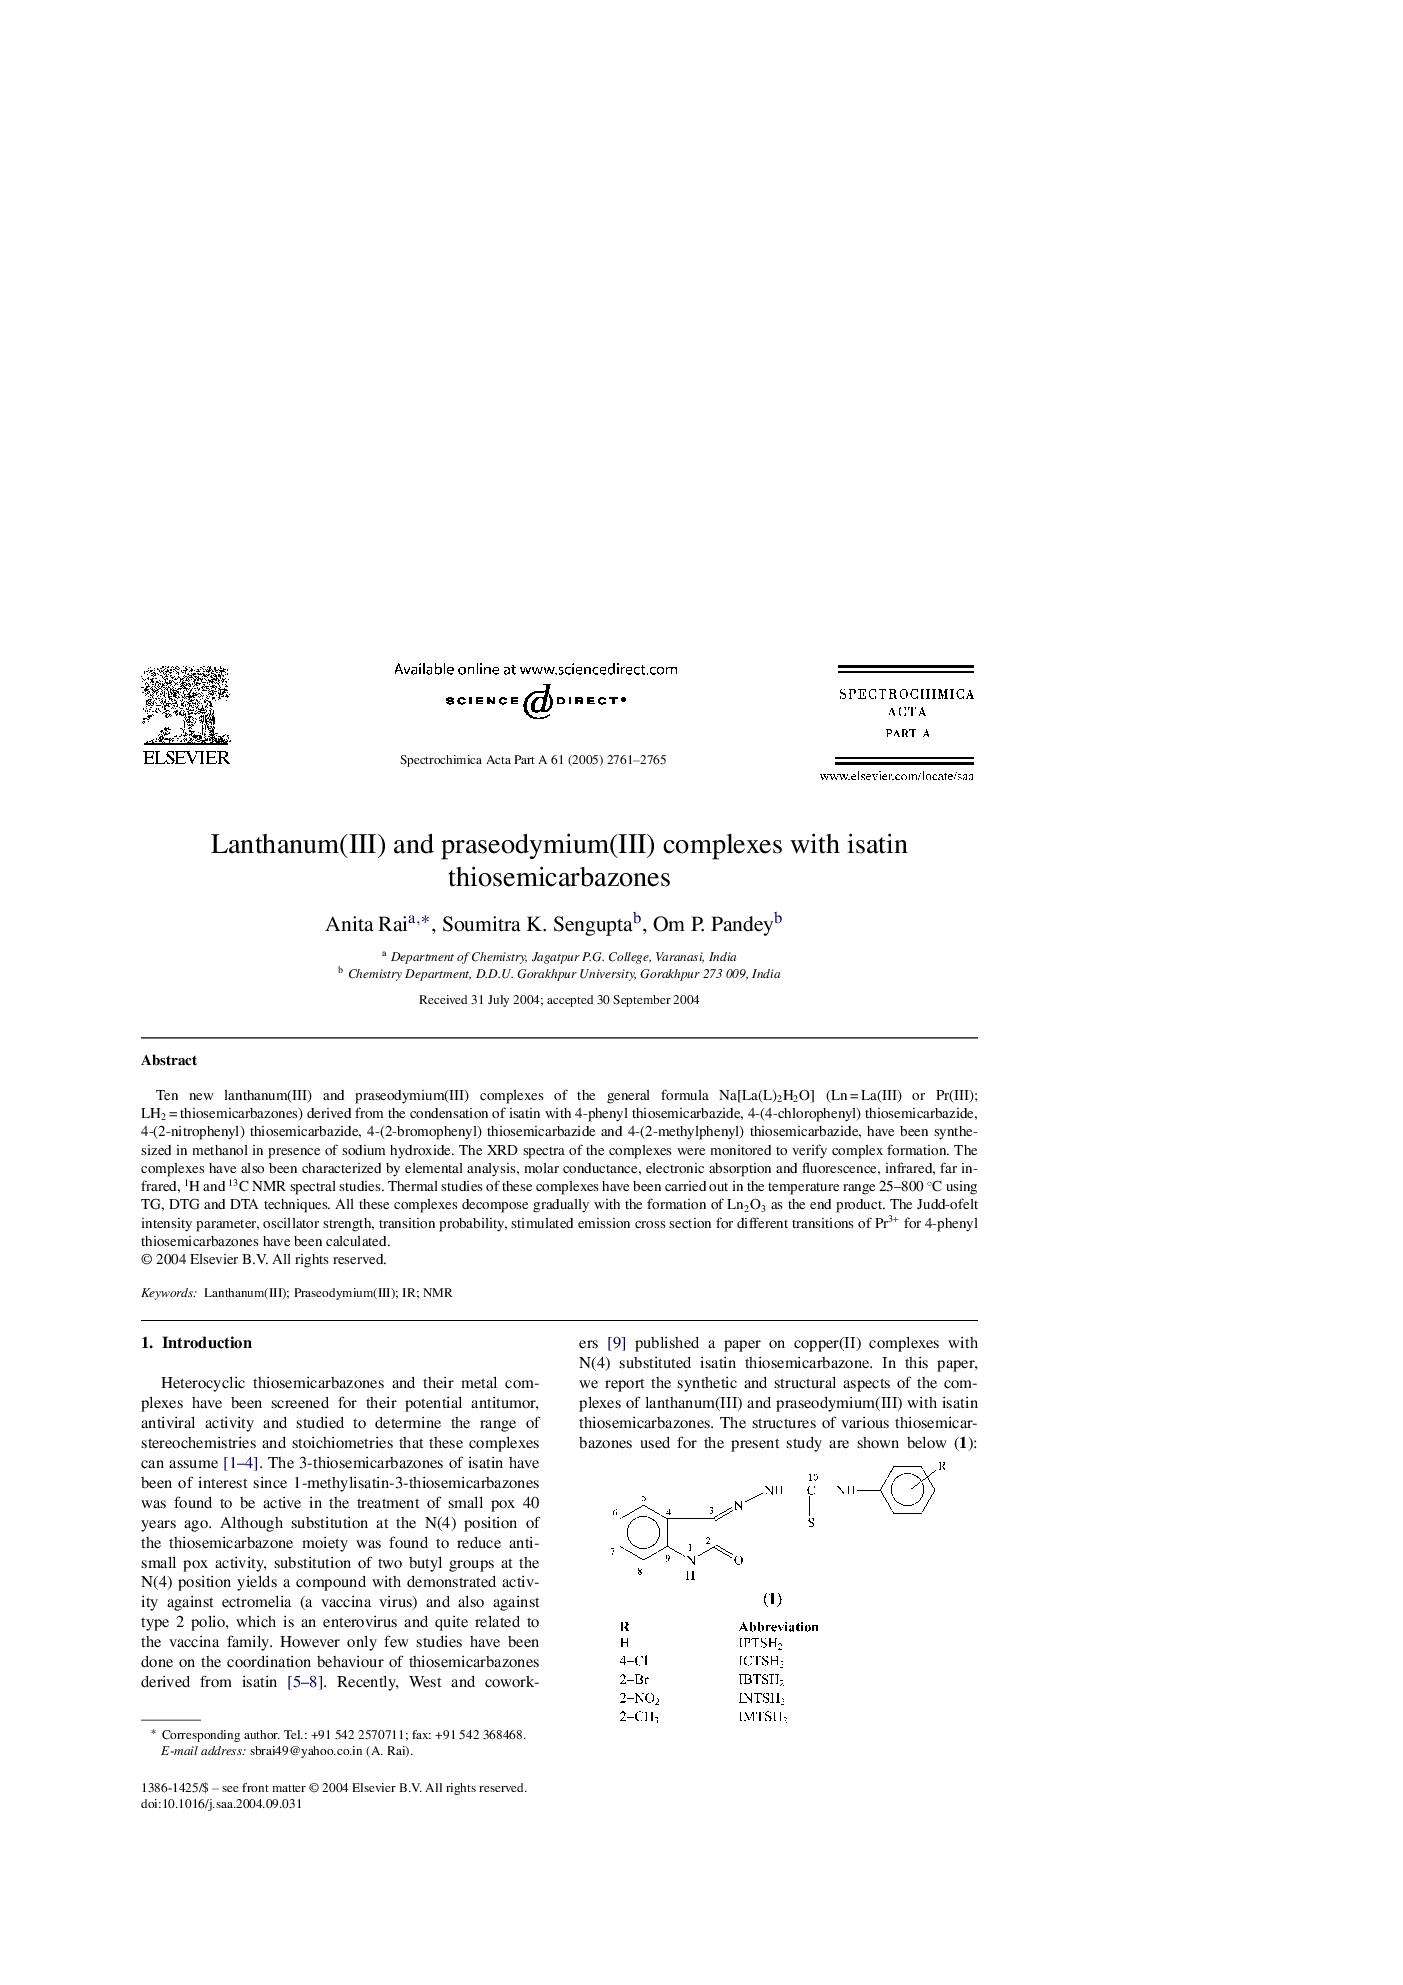 Lanthanum(III) and praseodymium(III) complexes with isatin thiosemicarbazones